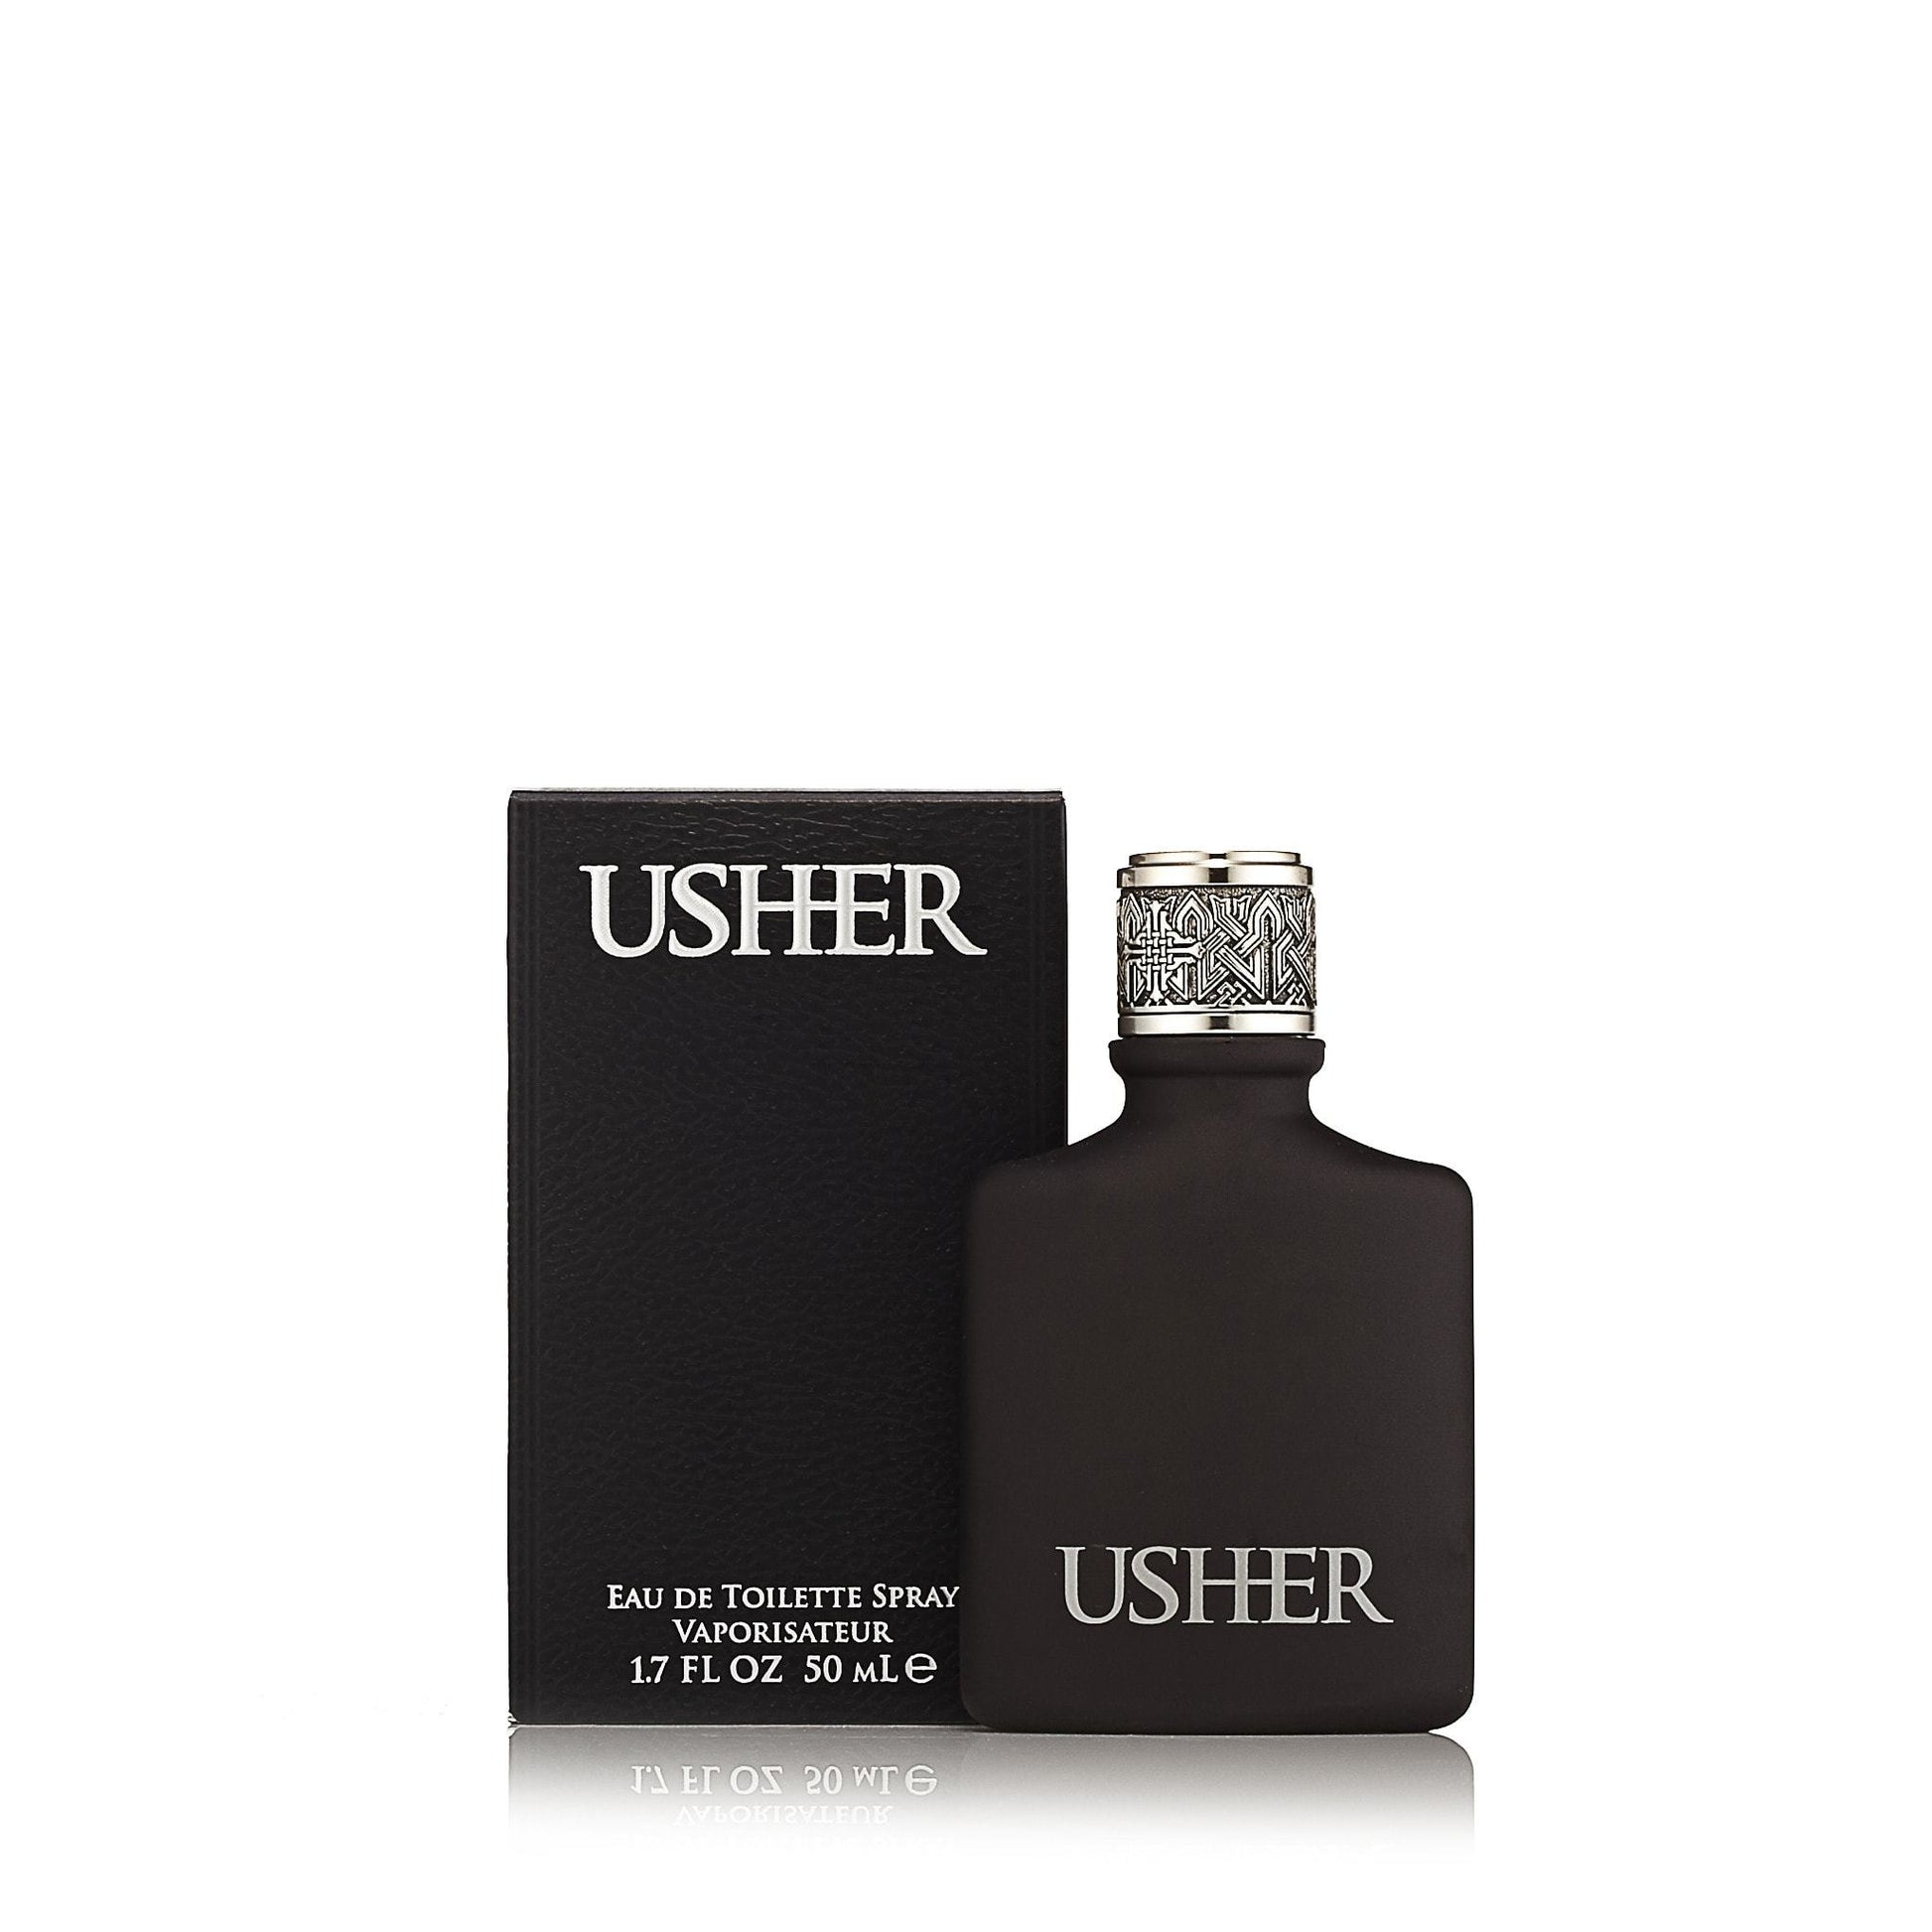 Usher Eau de Toilette Spray for Men by Usher, Product image 2